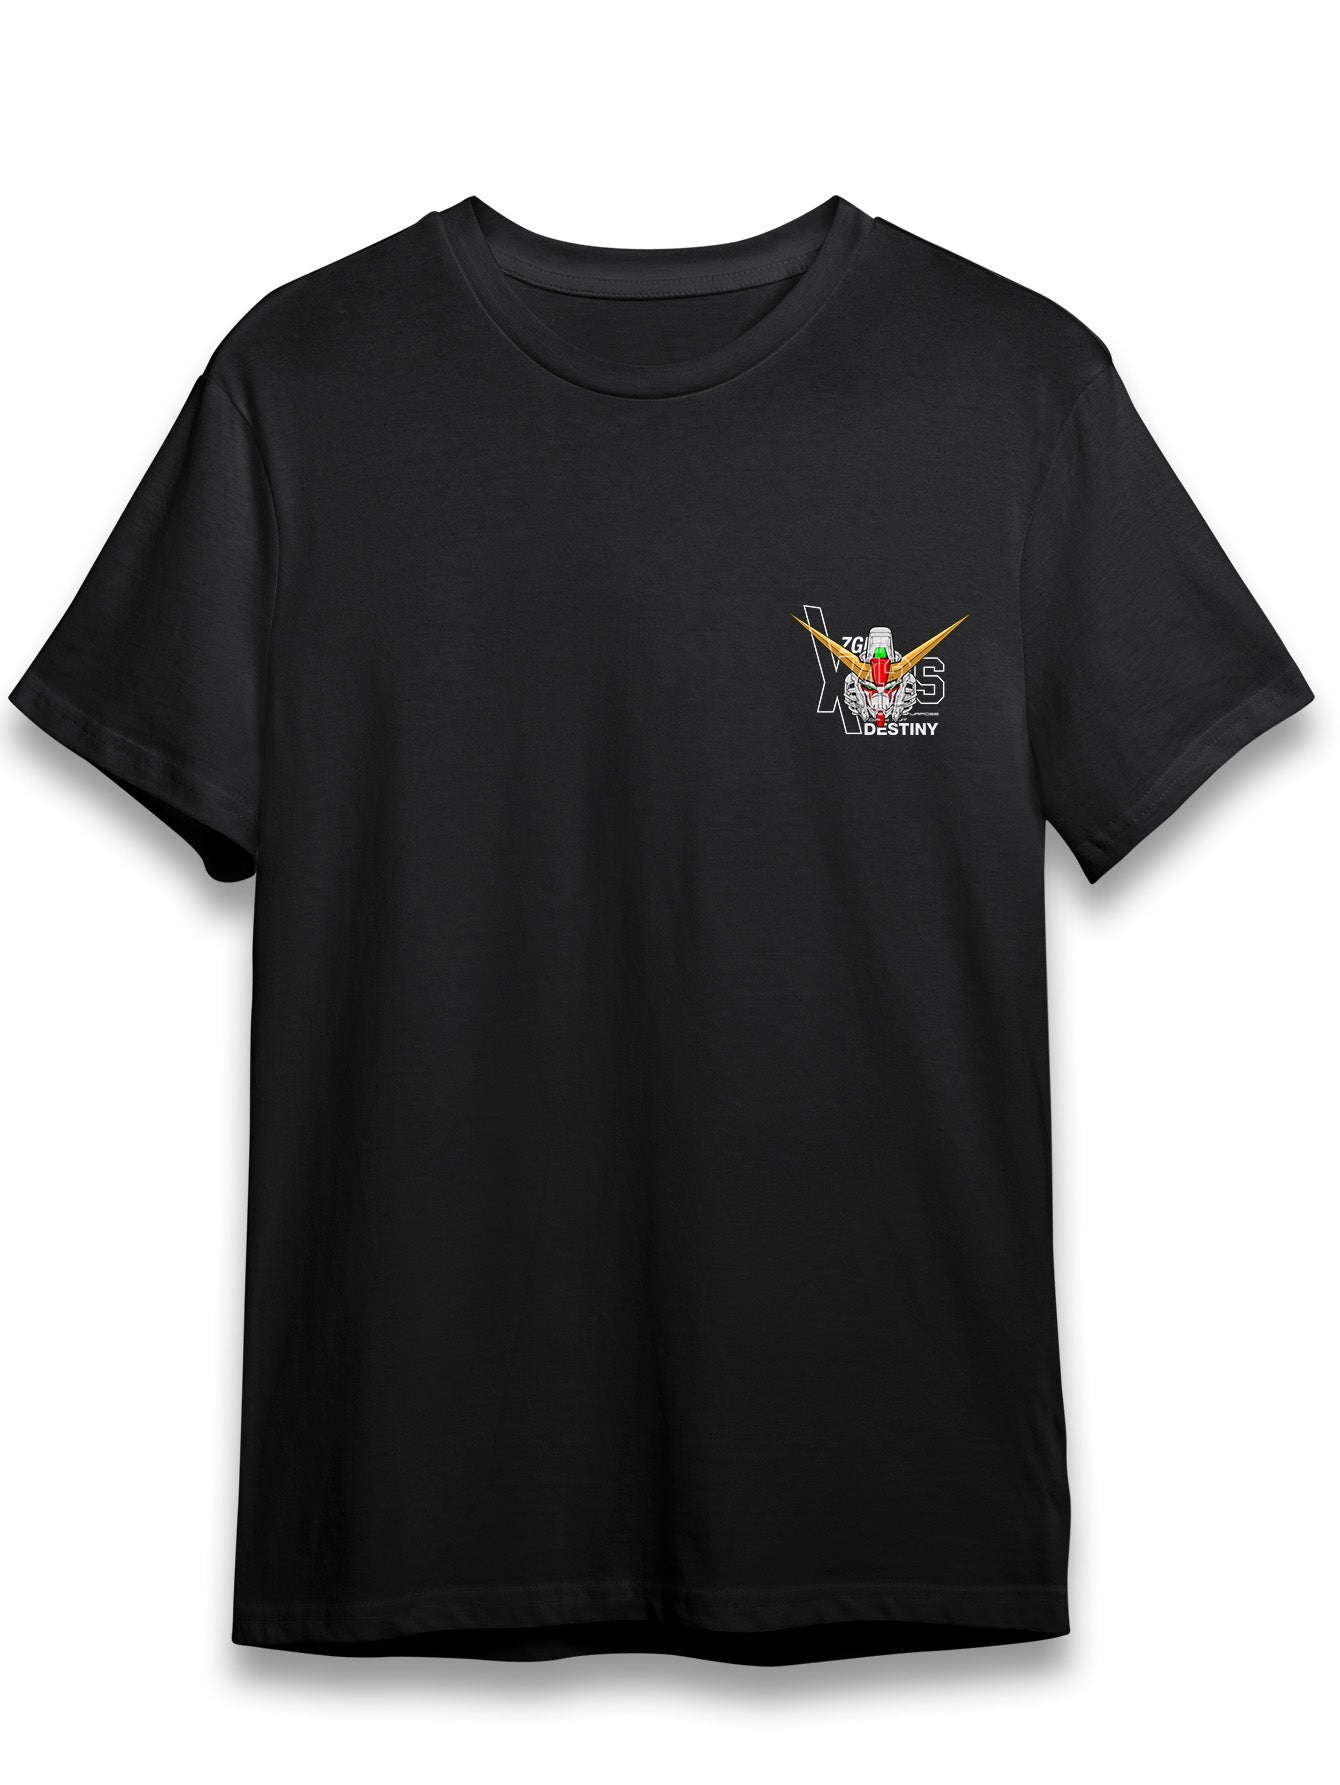 MSG Destiny Unisex T-Shirt